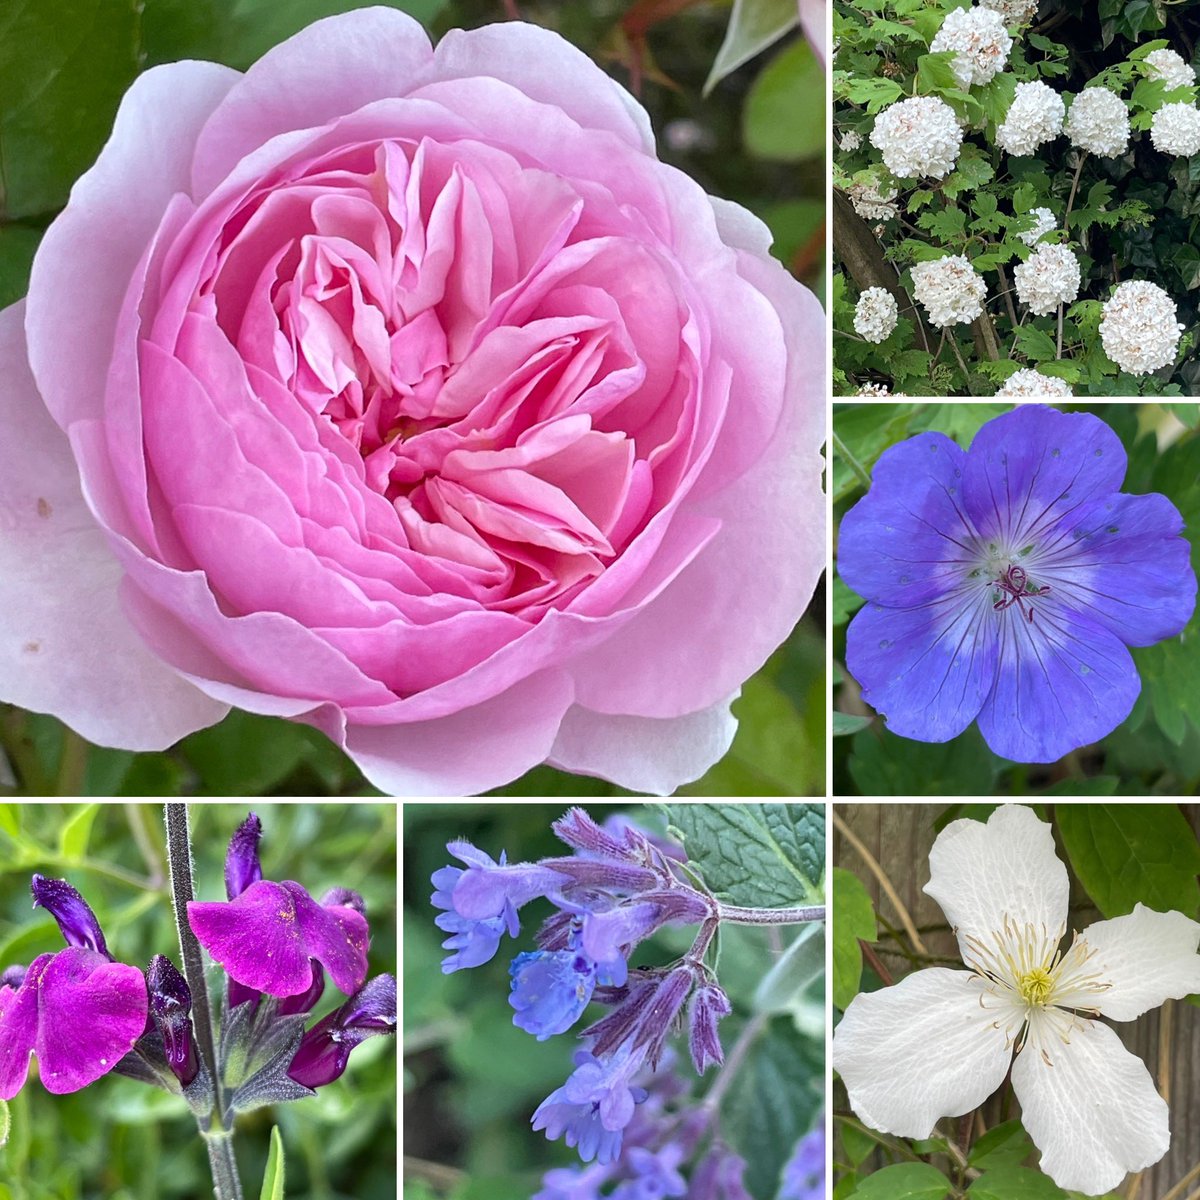 And the roses have arrived 🩷#SixOnSaturday #GardenersWorld #GardeningTwitter